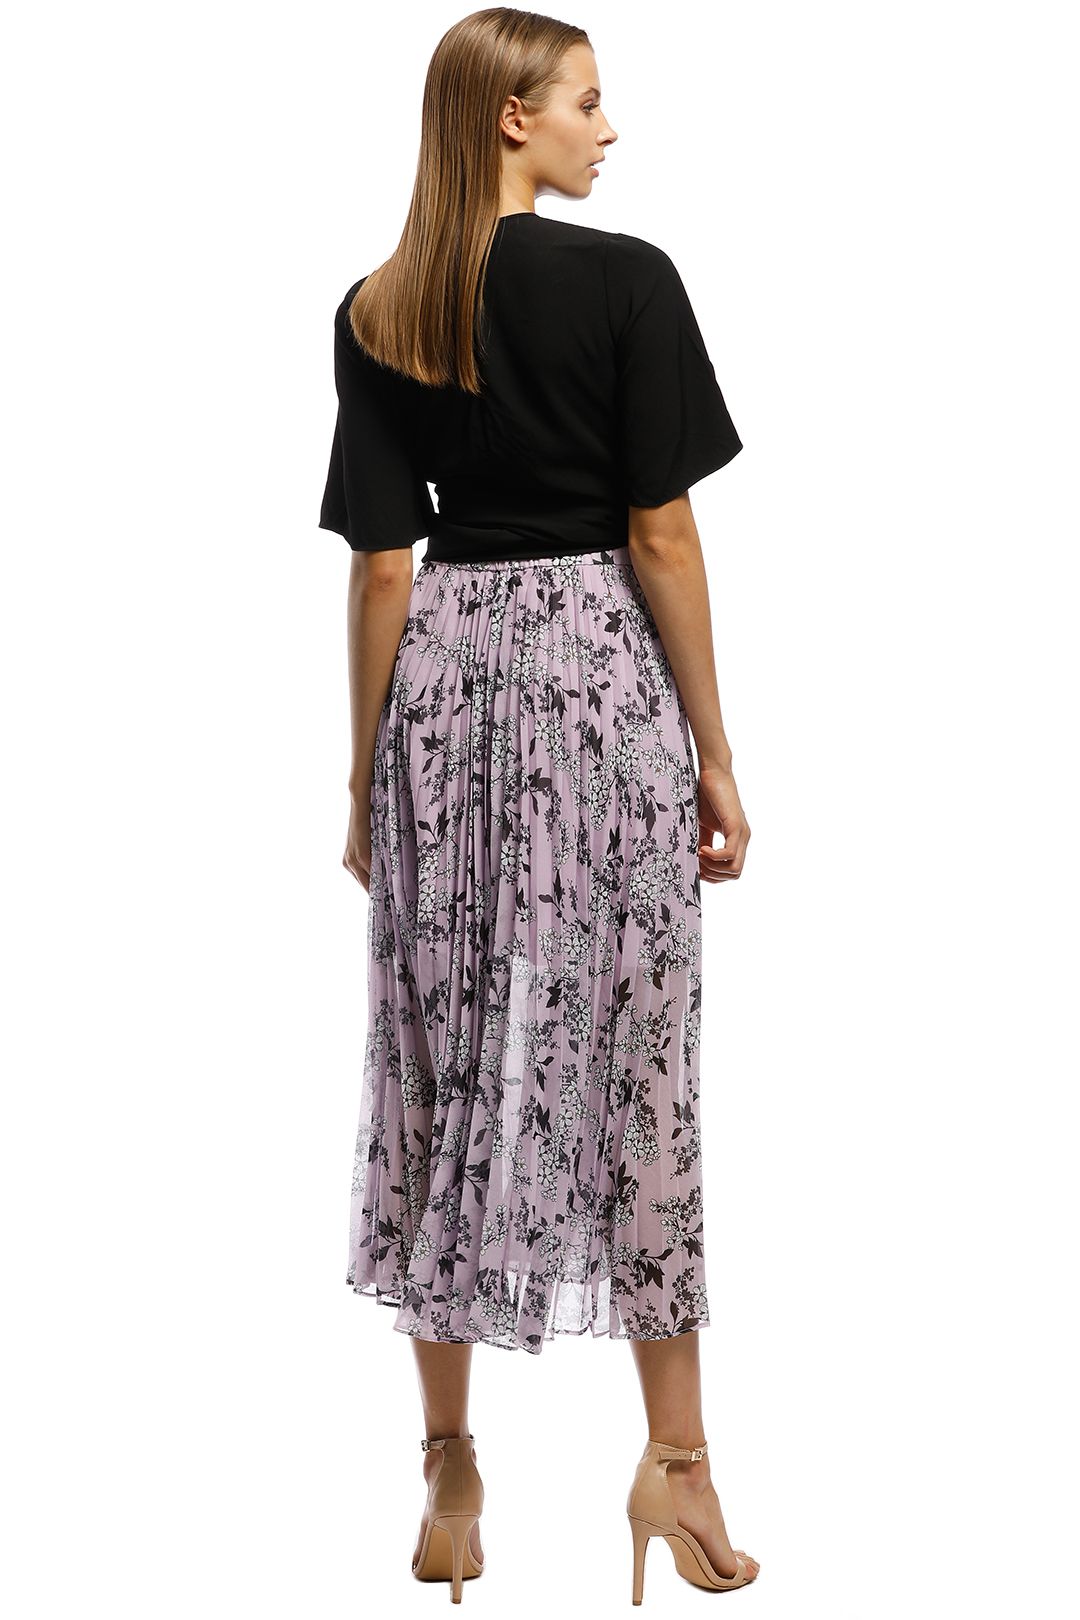 Keepsake The Label - Unique Skirt - Lilac Floral - Back